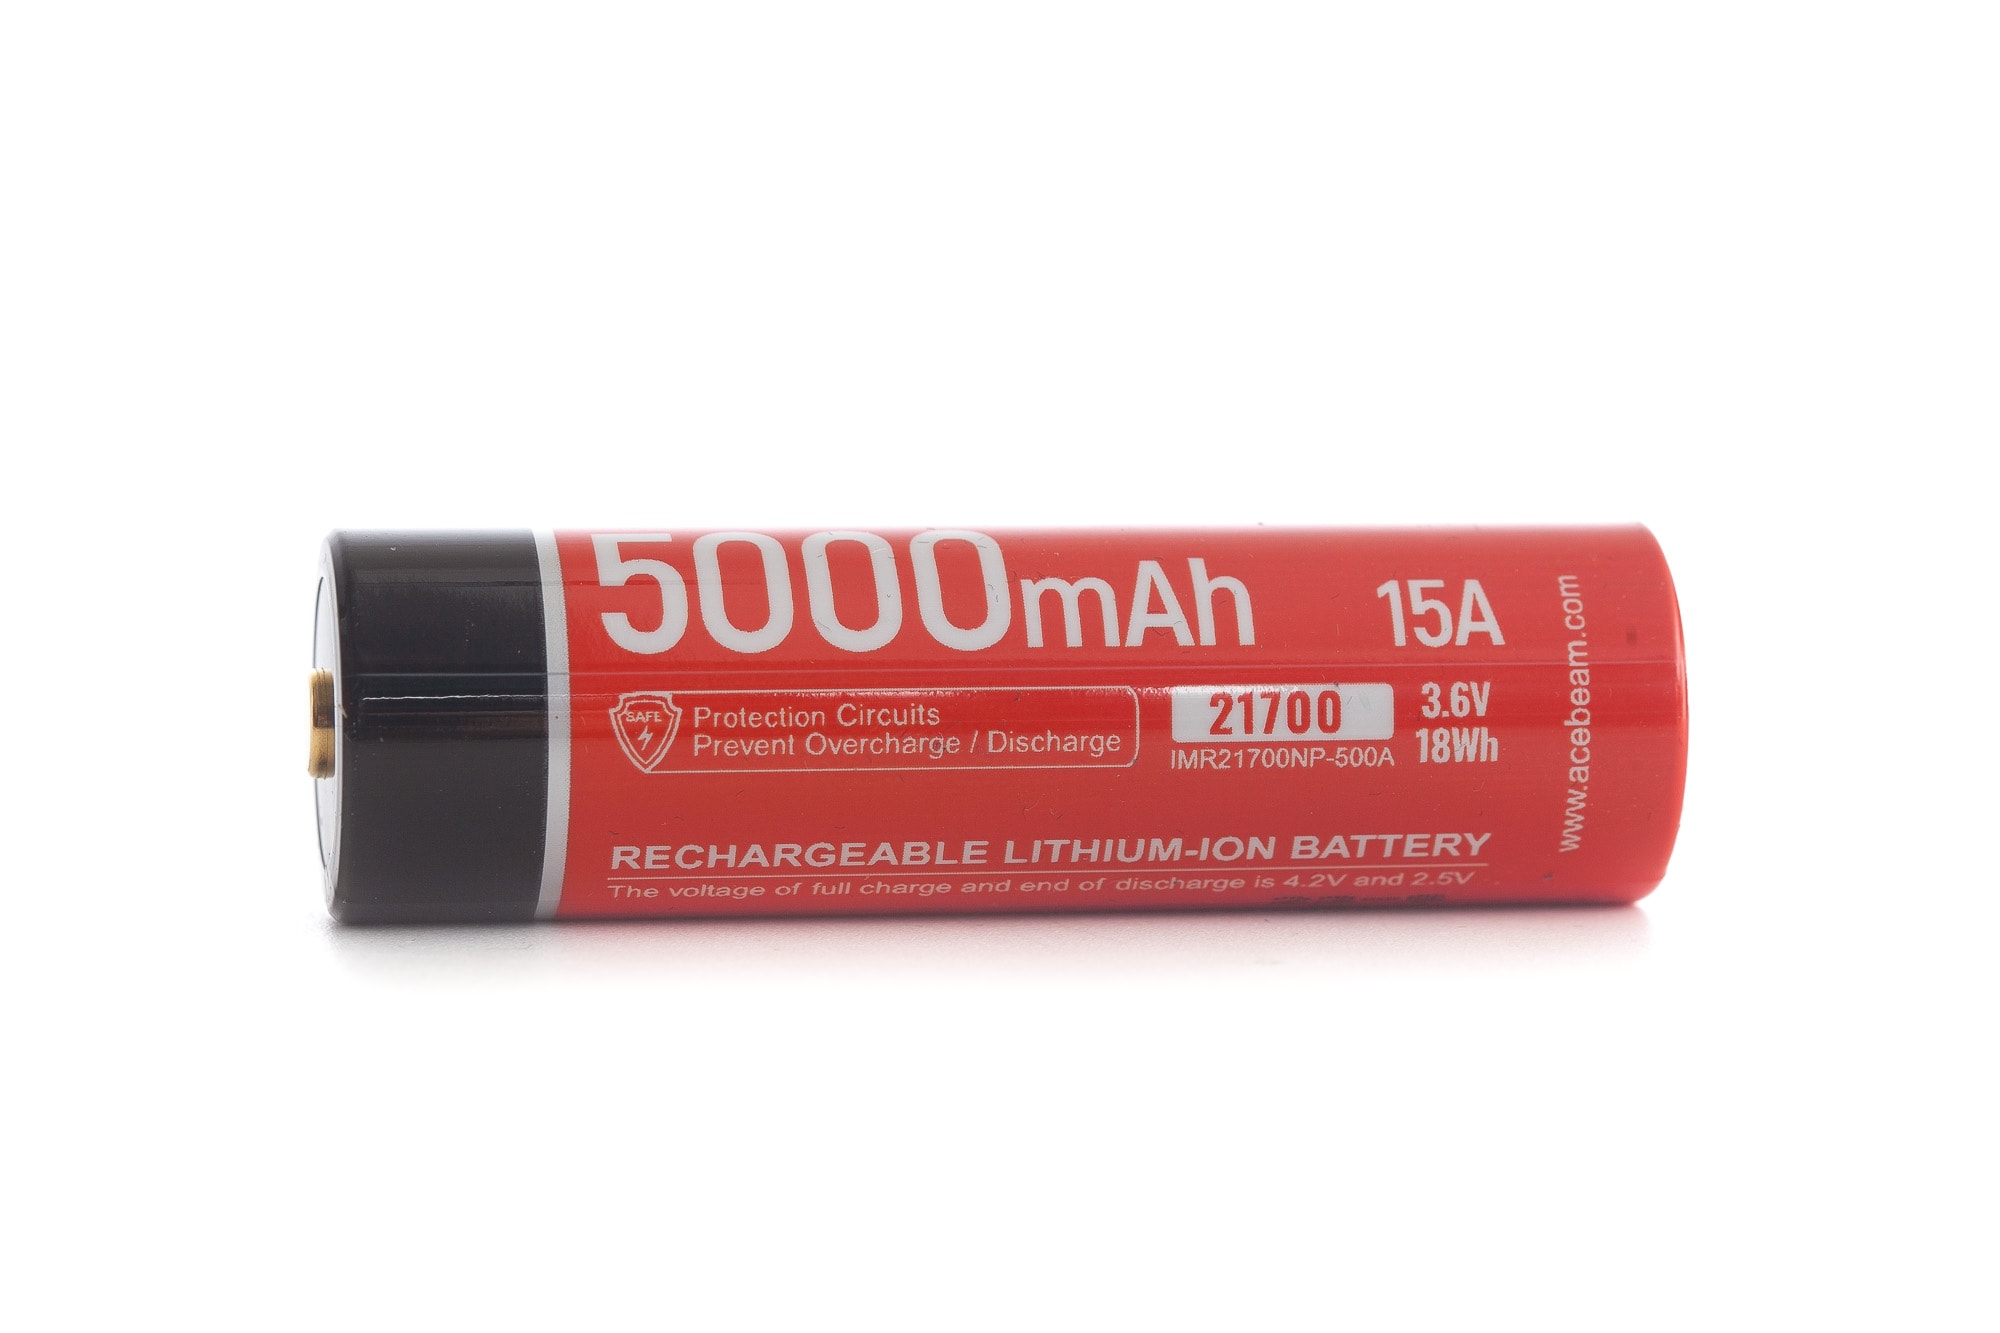 acebeam imr21700np 500a battery